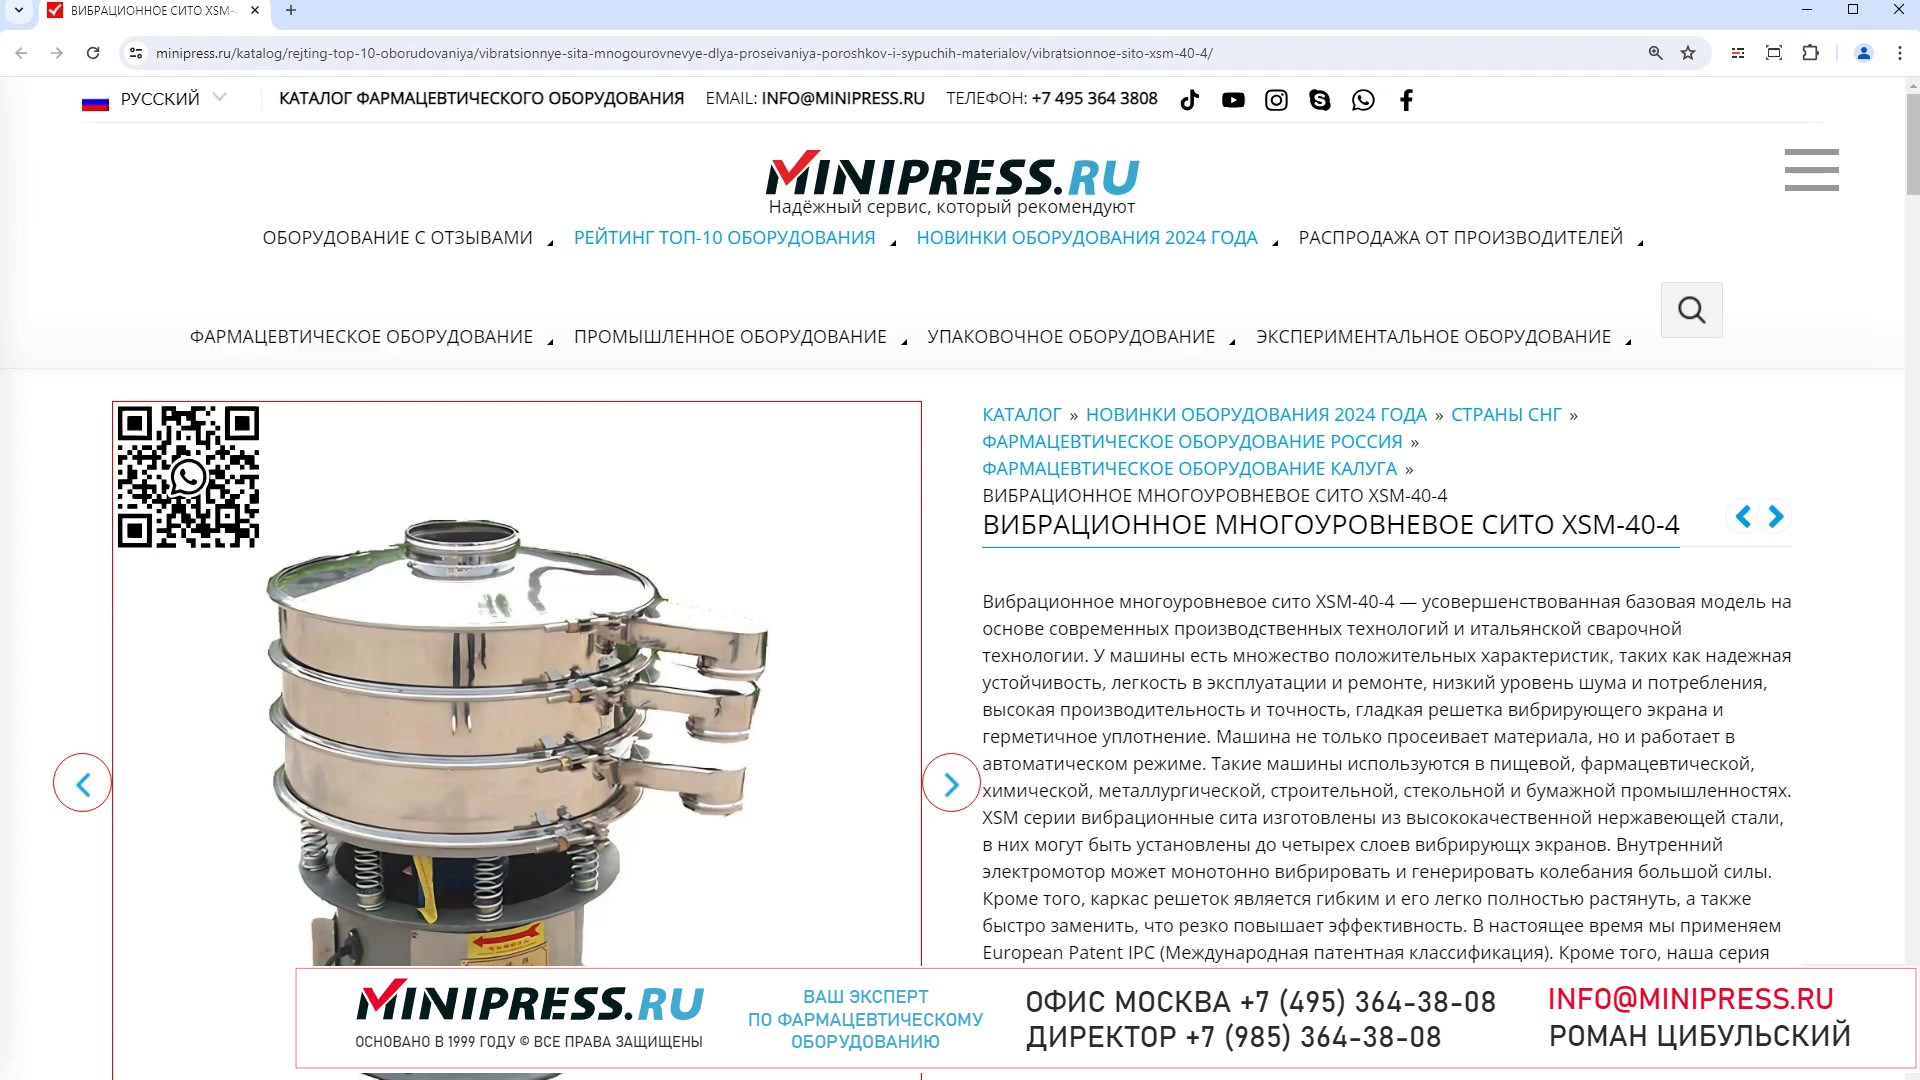 Minipress.ru Вибрационное многоуровневое сито XSM-40-4